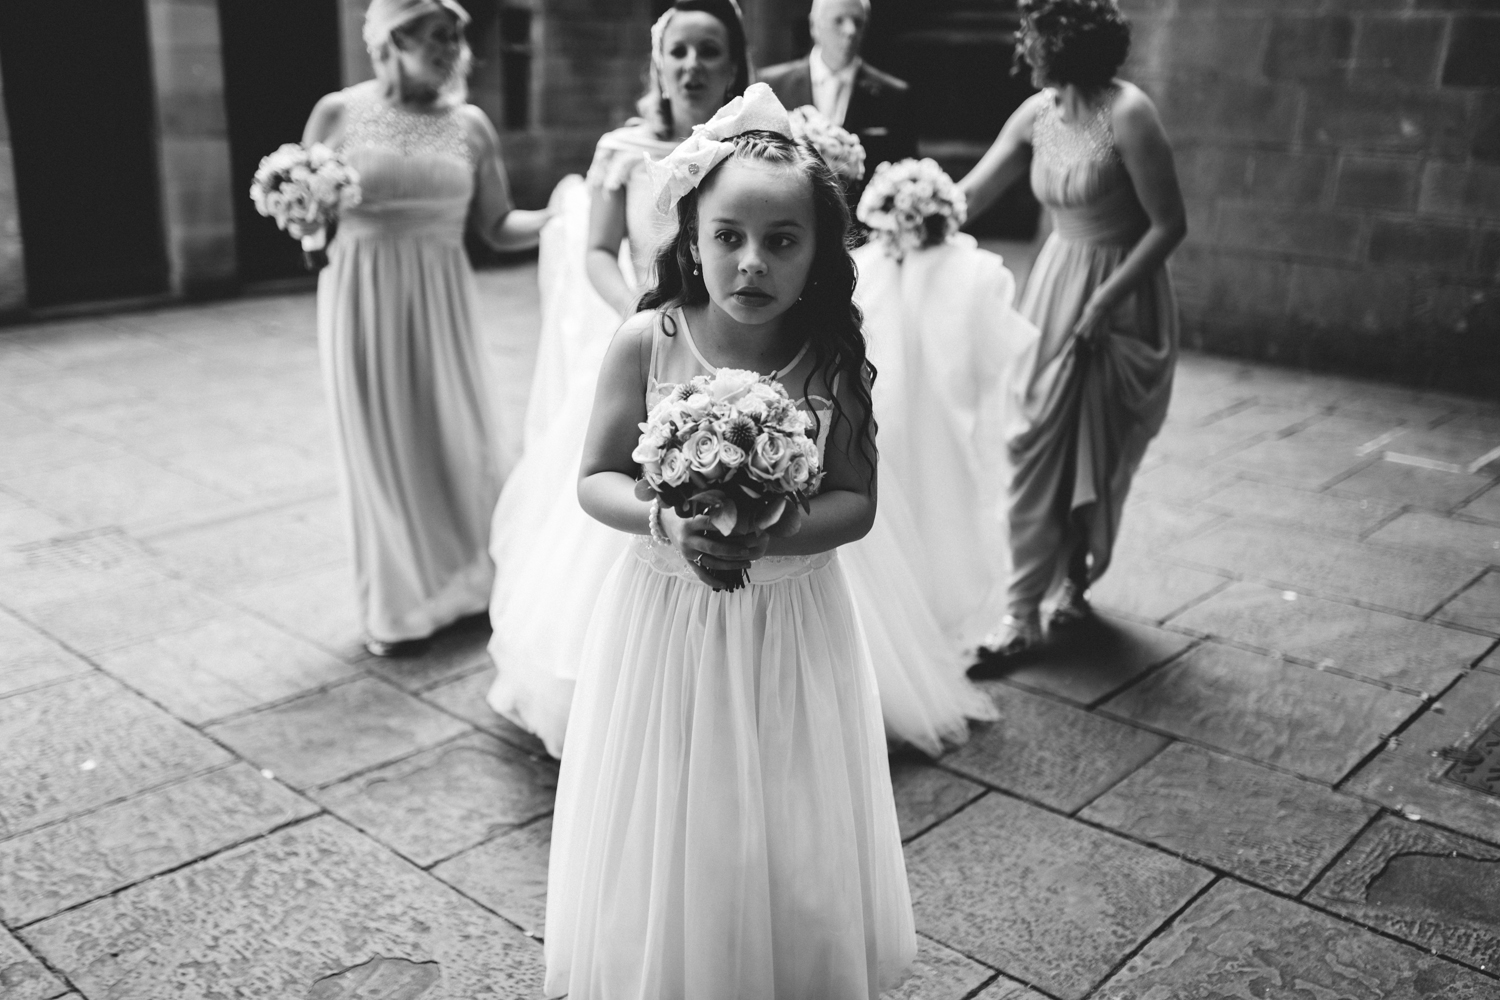 nervous little girl at wedding